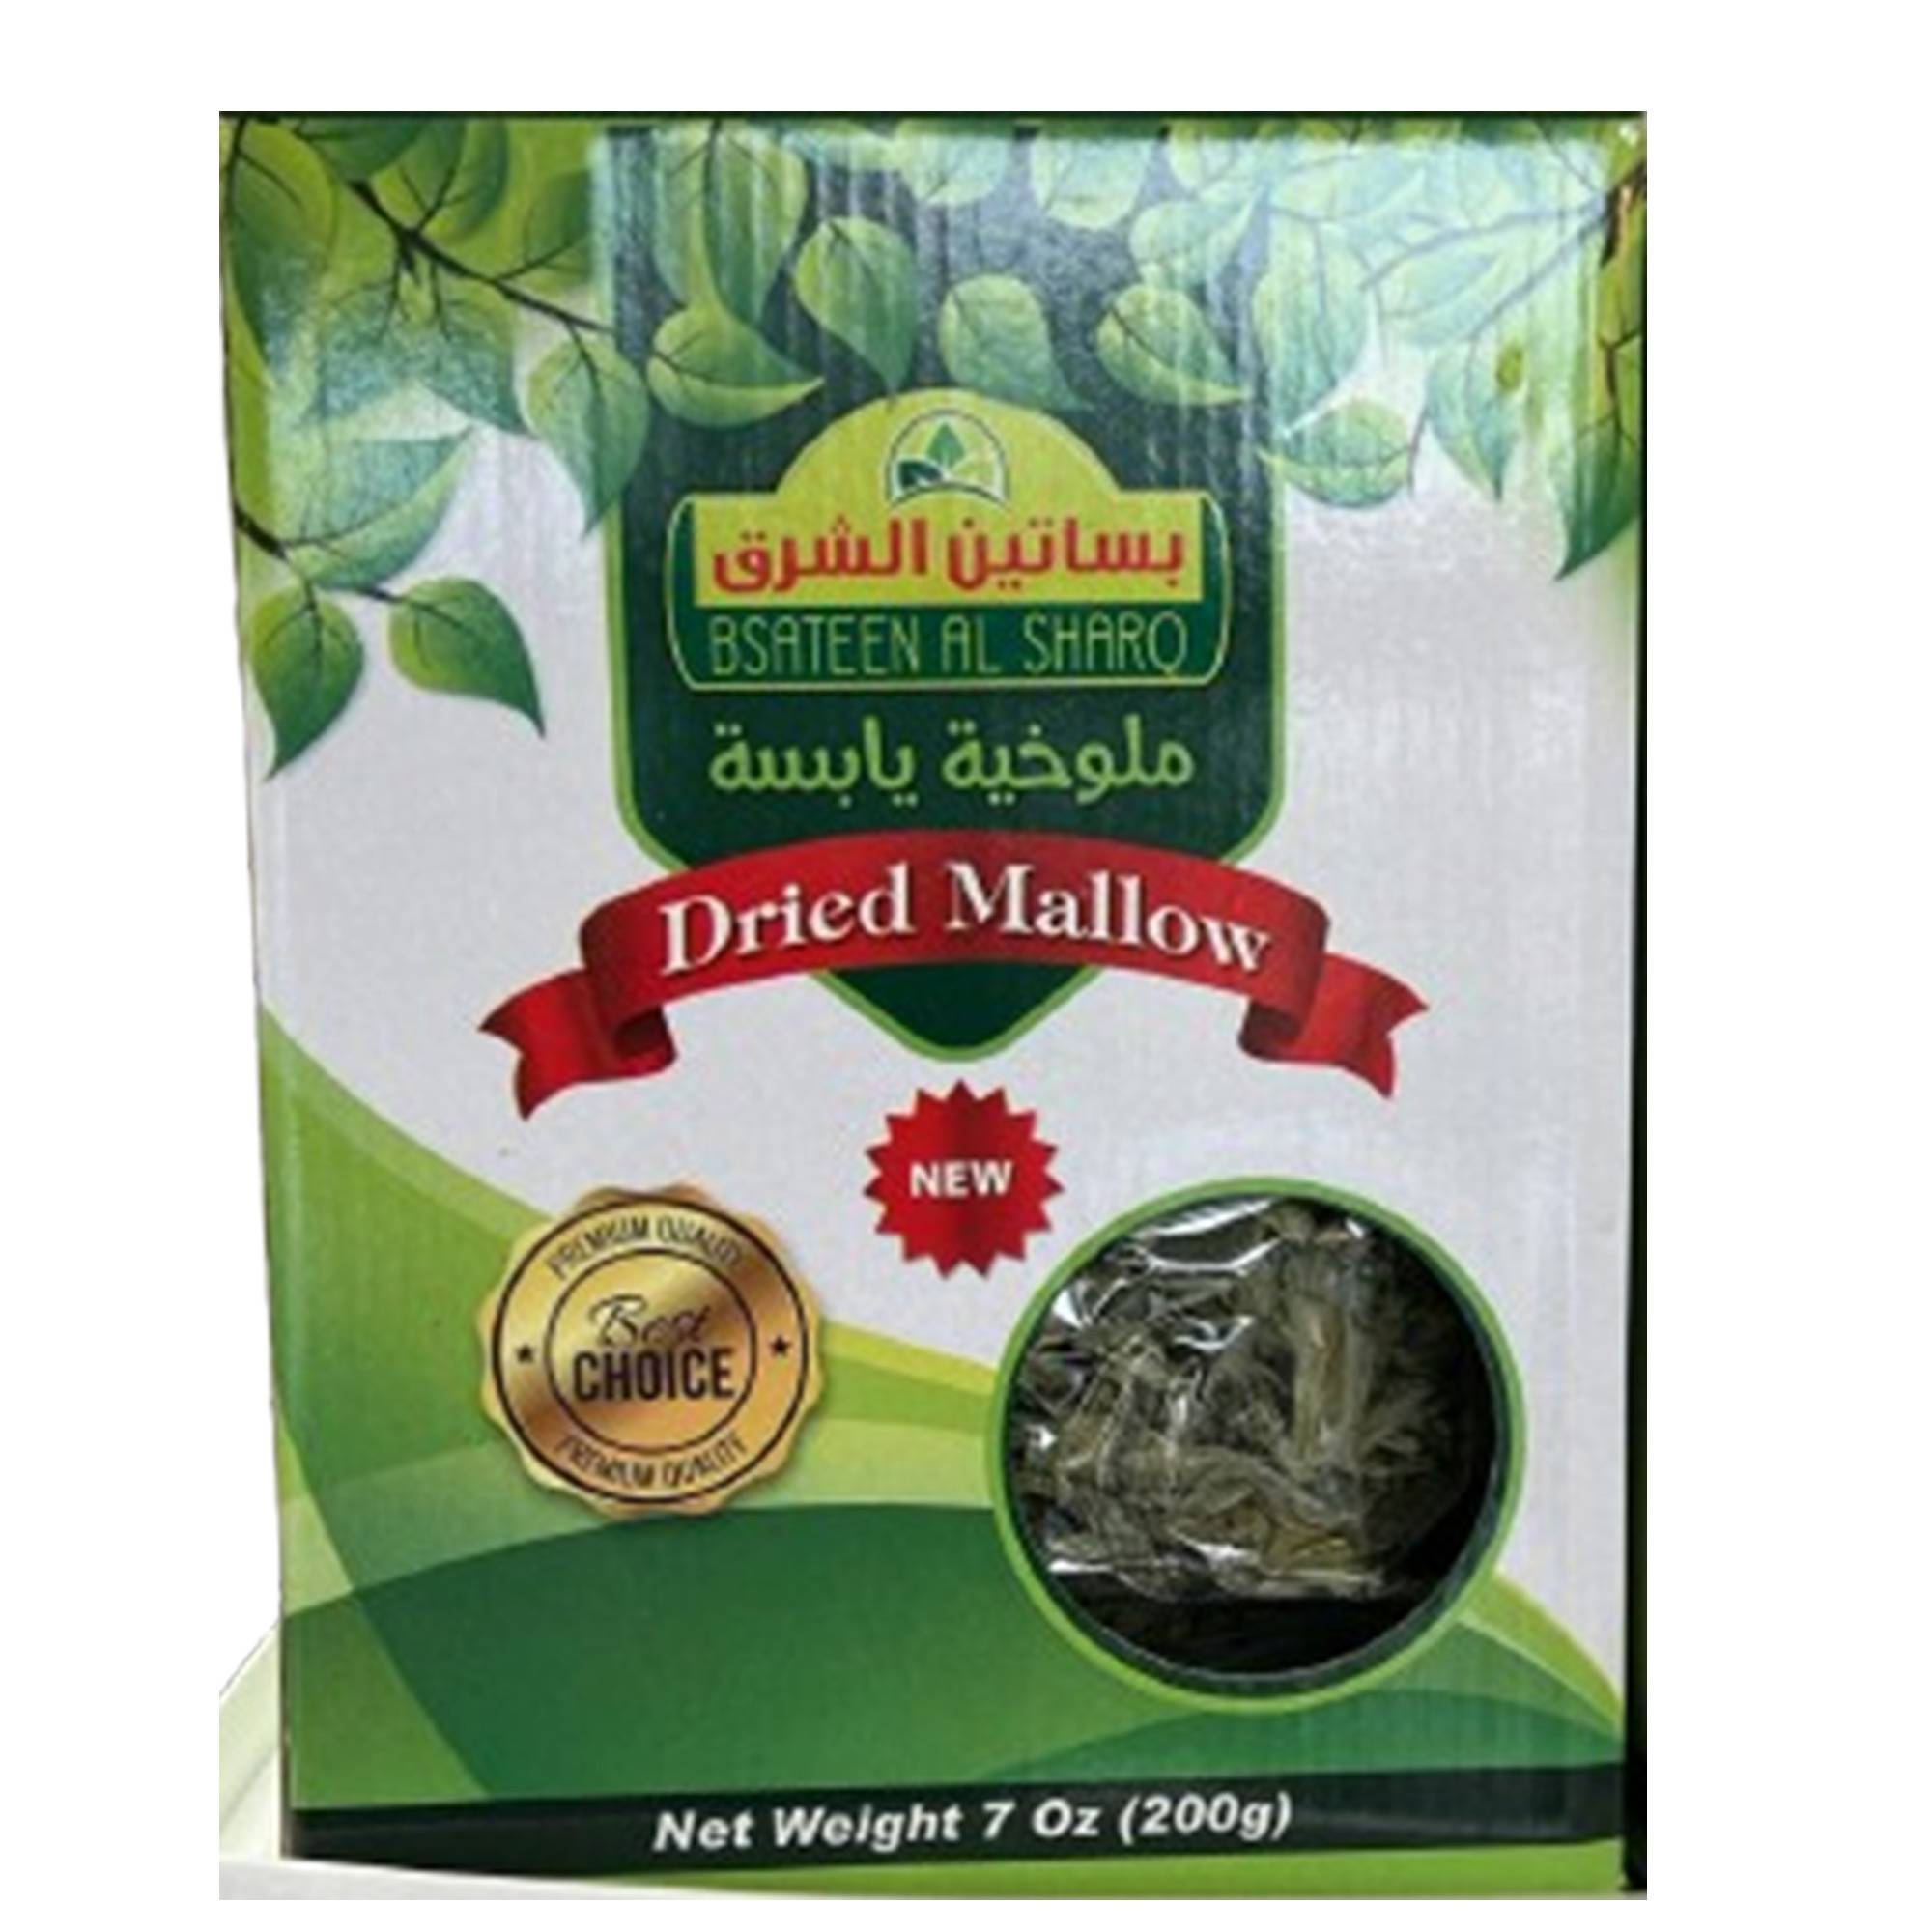 BASATEEN AL SHARQ Dried Mallow, 200g. 